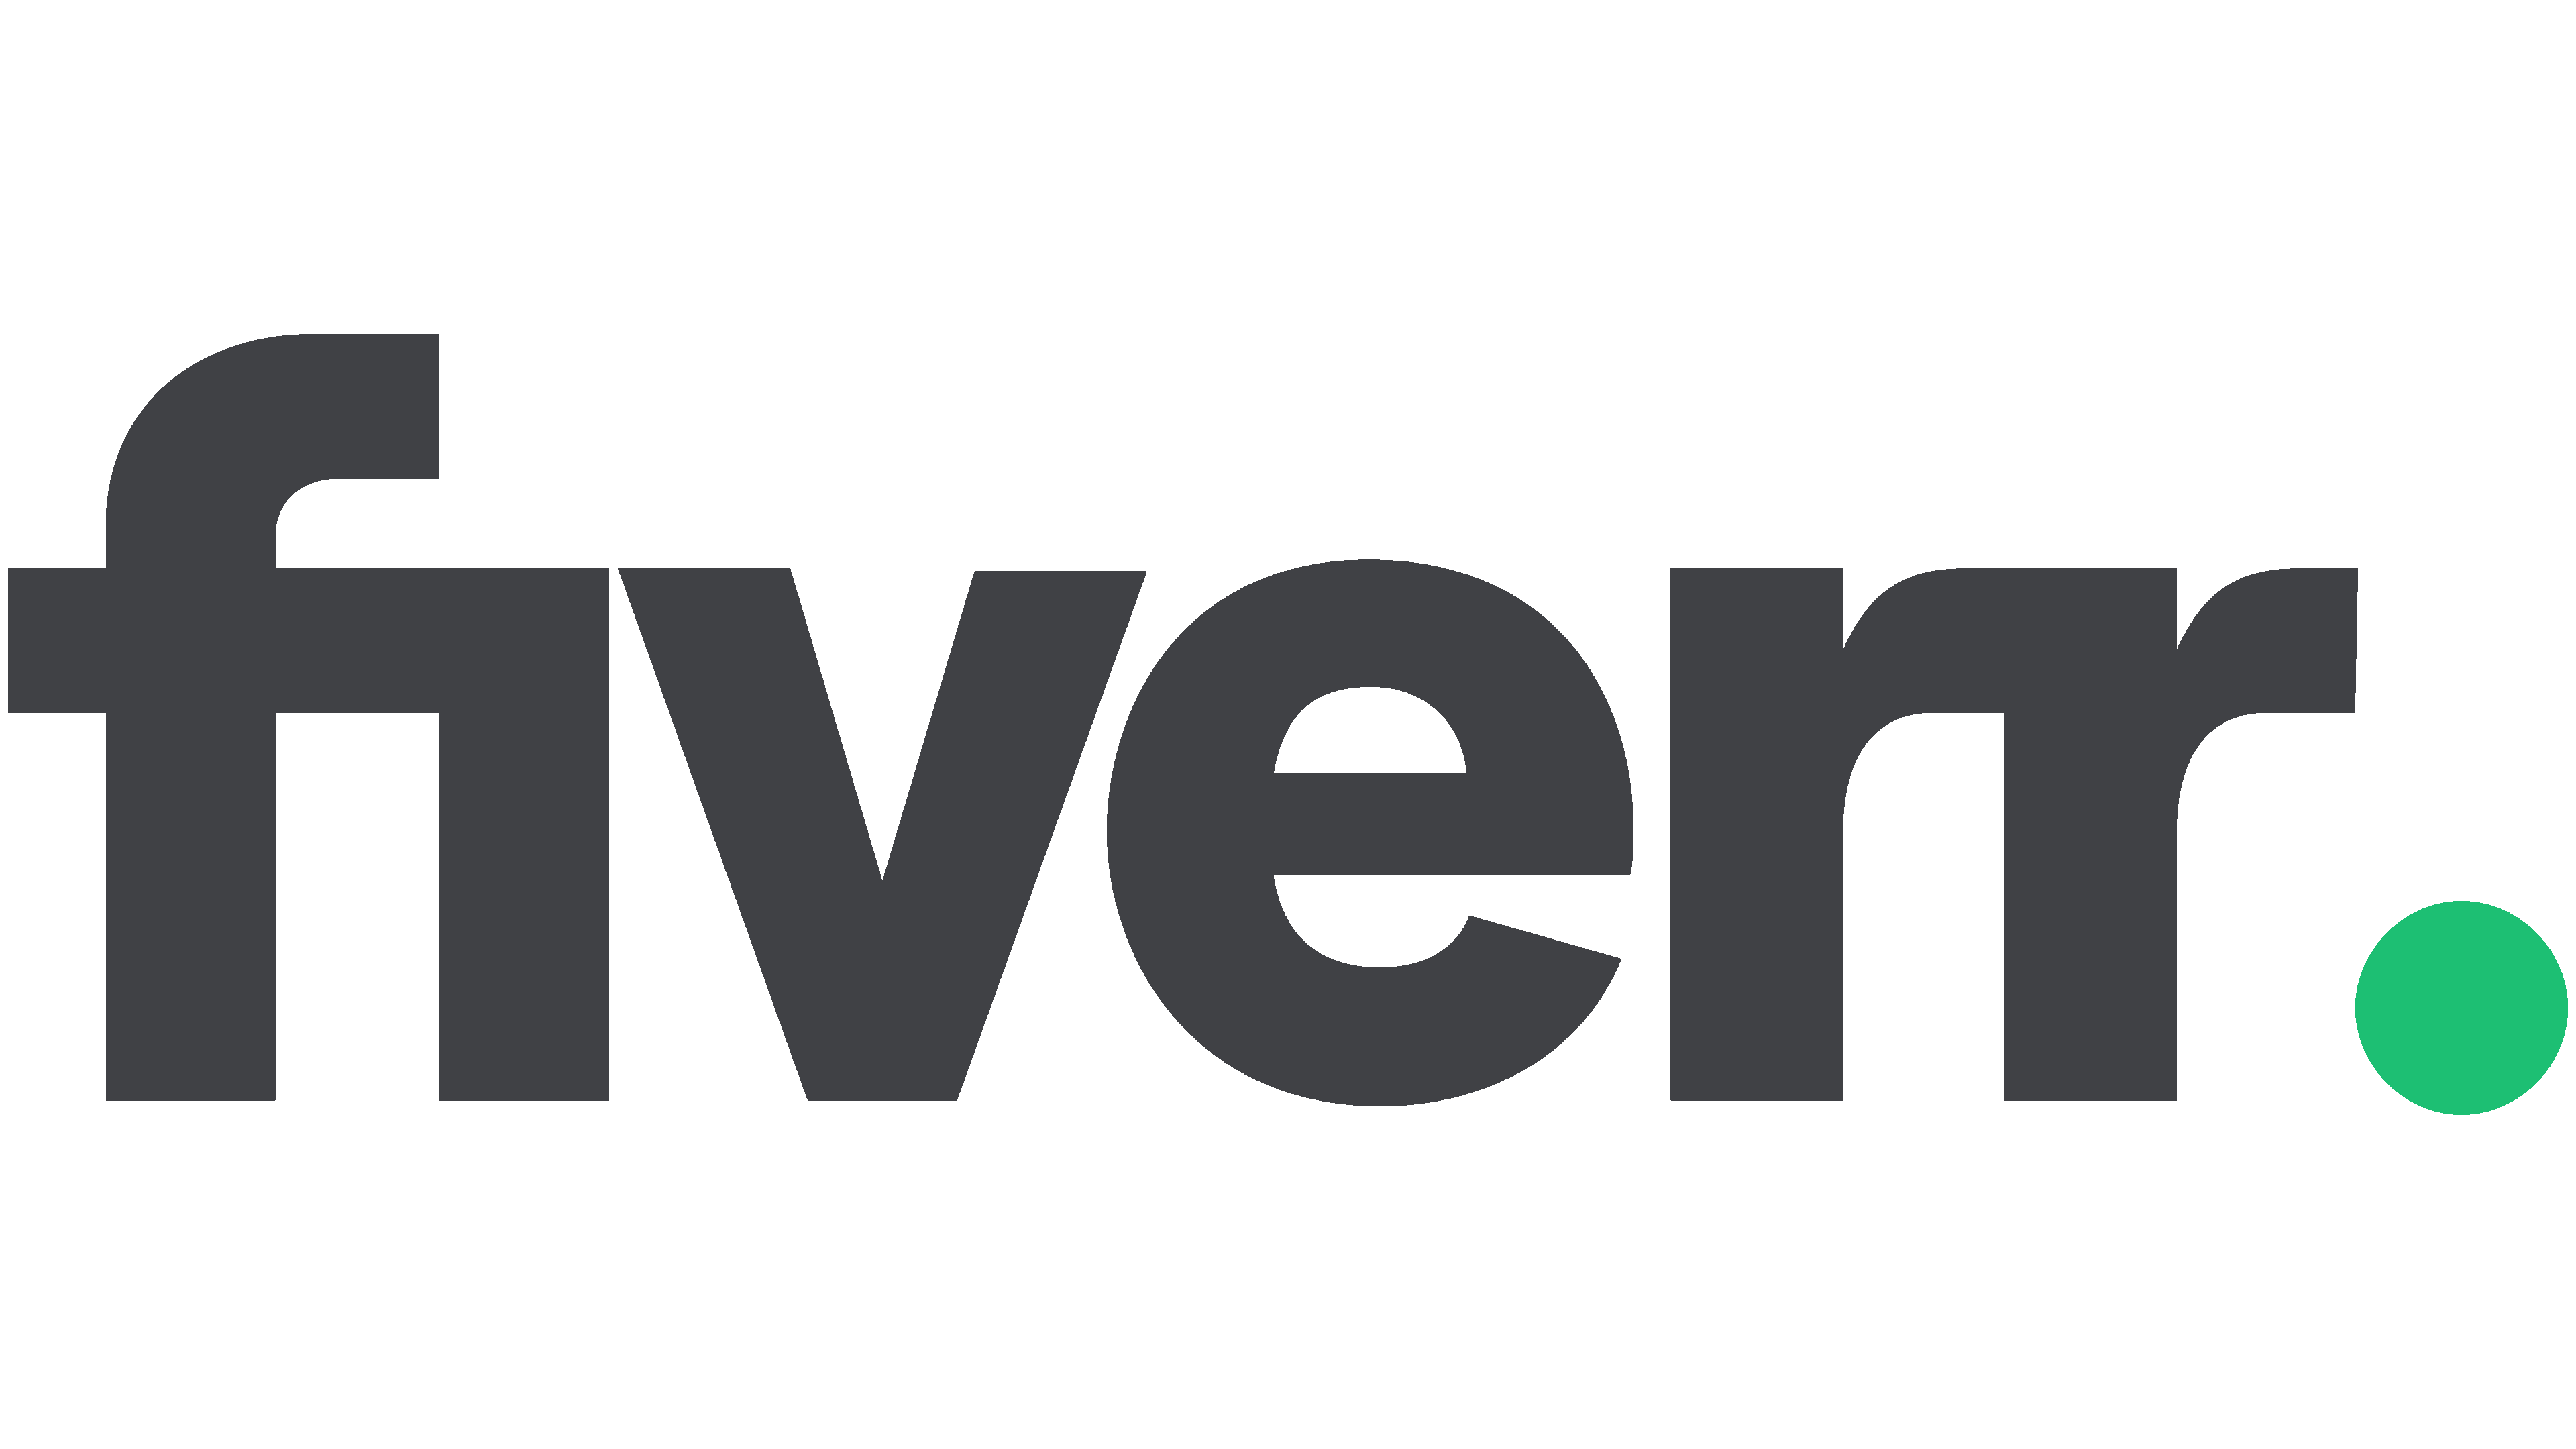 Fiverr-Logo